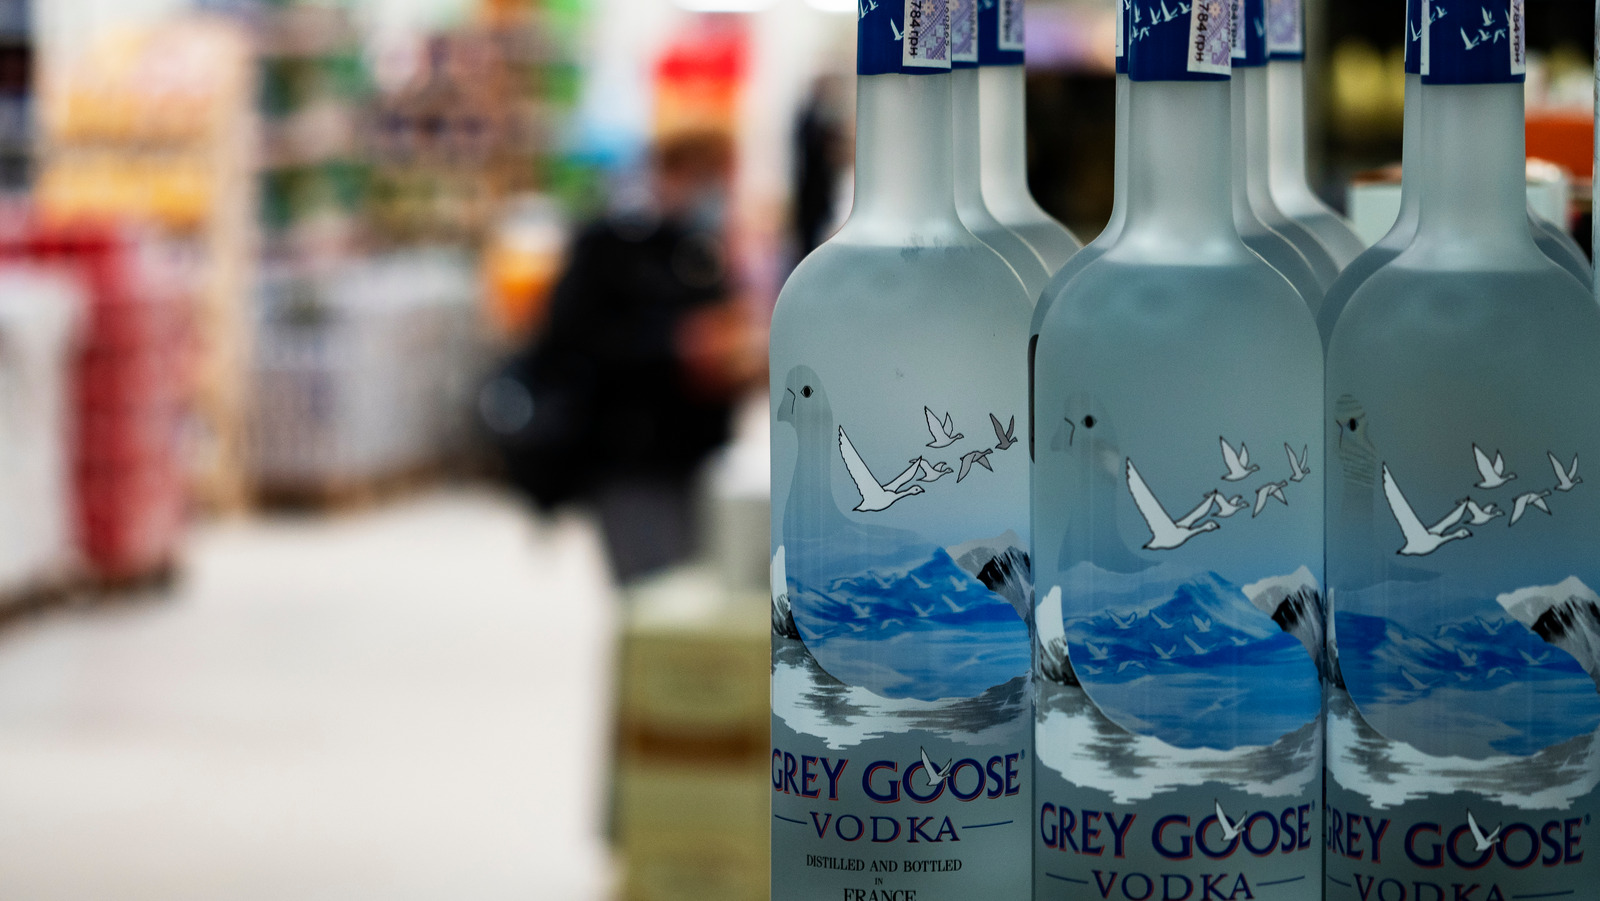 A History of Grey Goose Vodka